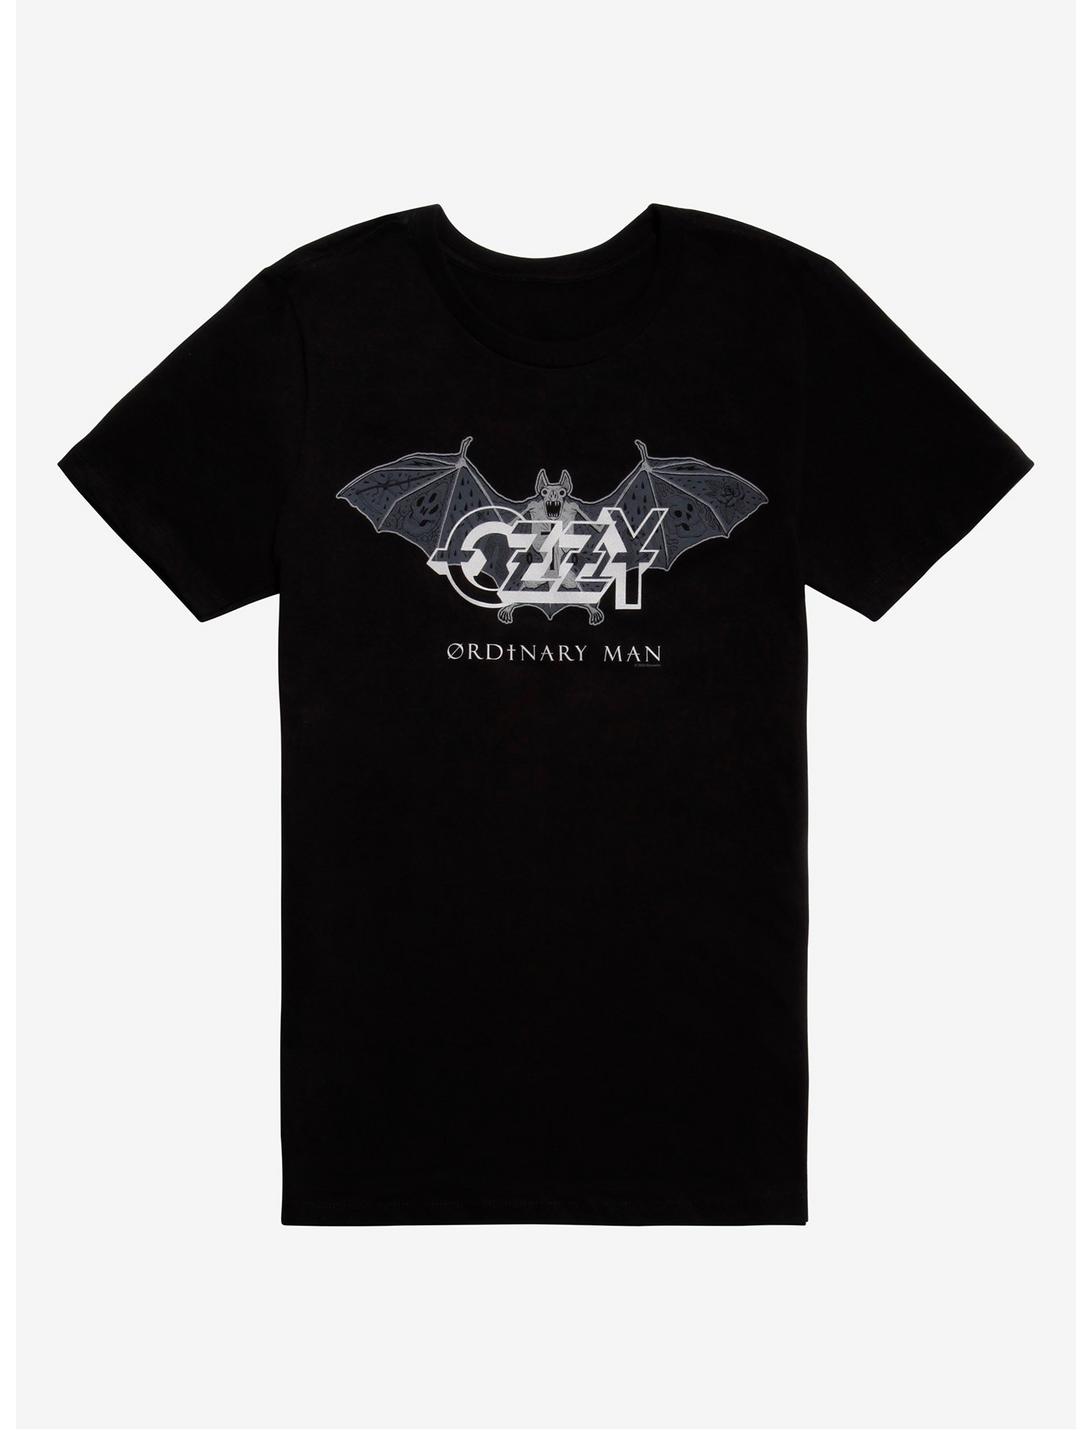 Ozzy Osbourne Ordinary Man Album Title T-Shirt, BLACK, hi-res